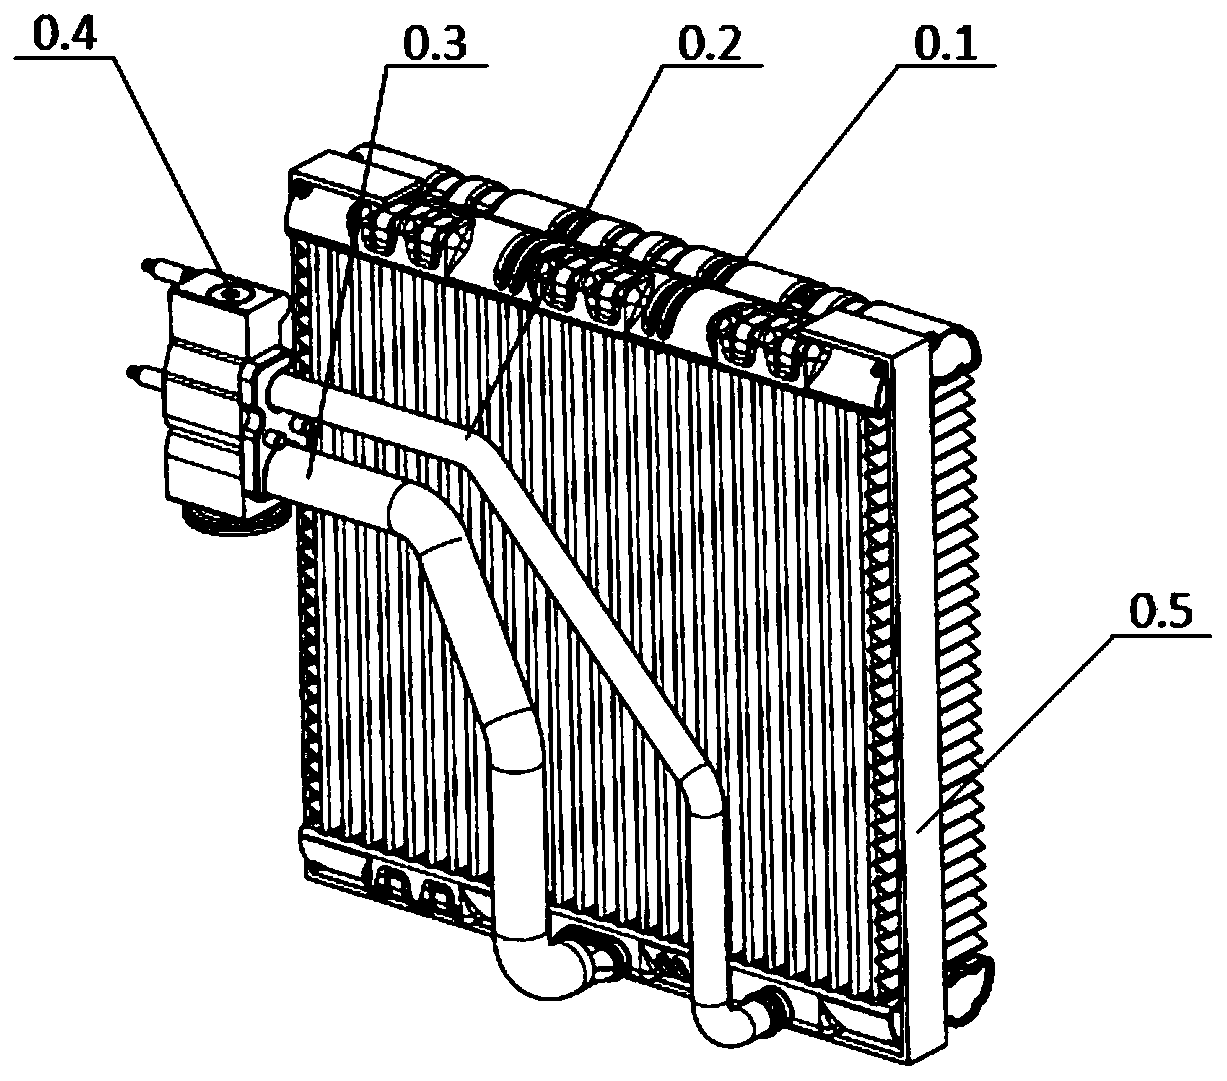 Assembling device for core sponge of evaporator assembly